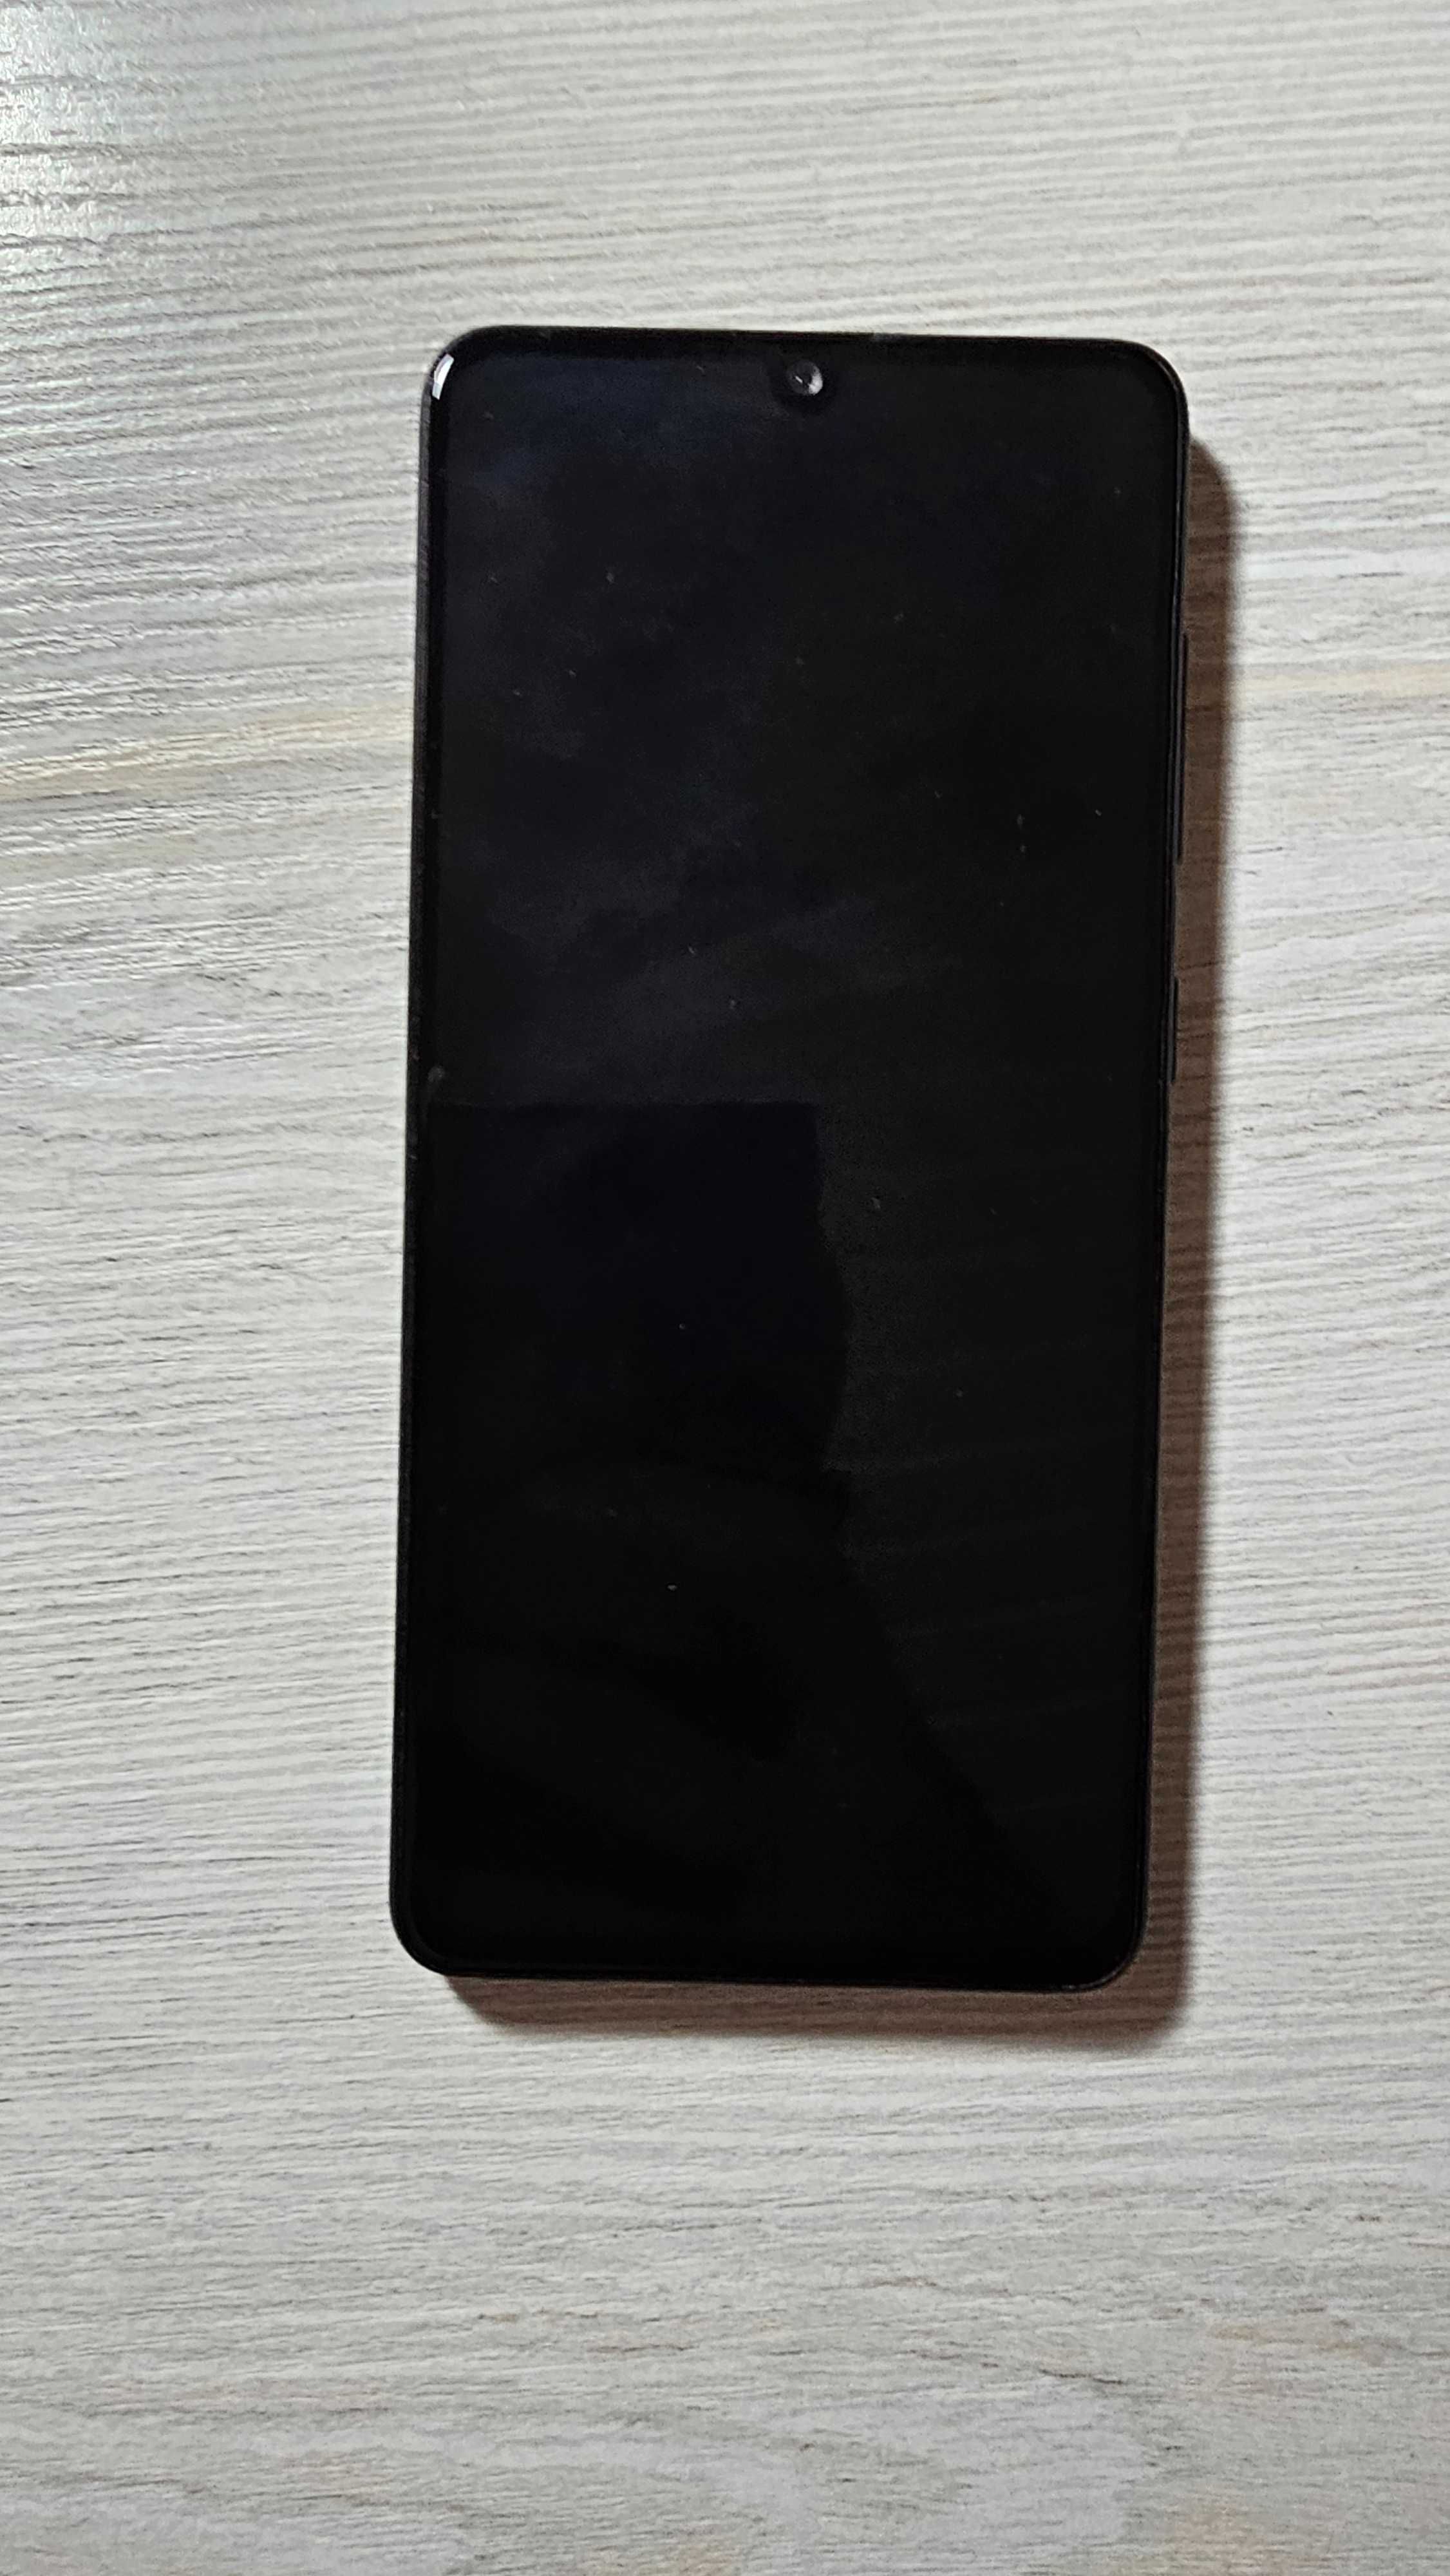 Samsung A41 4/64 (Black)